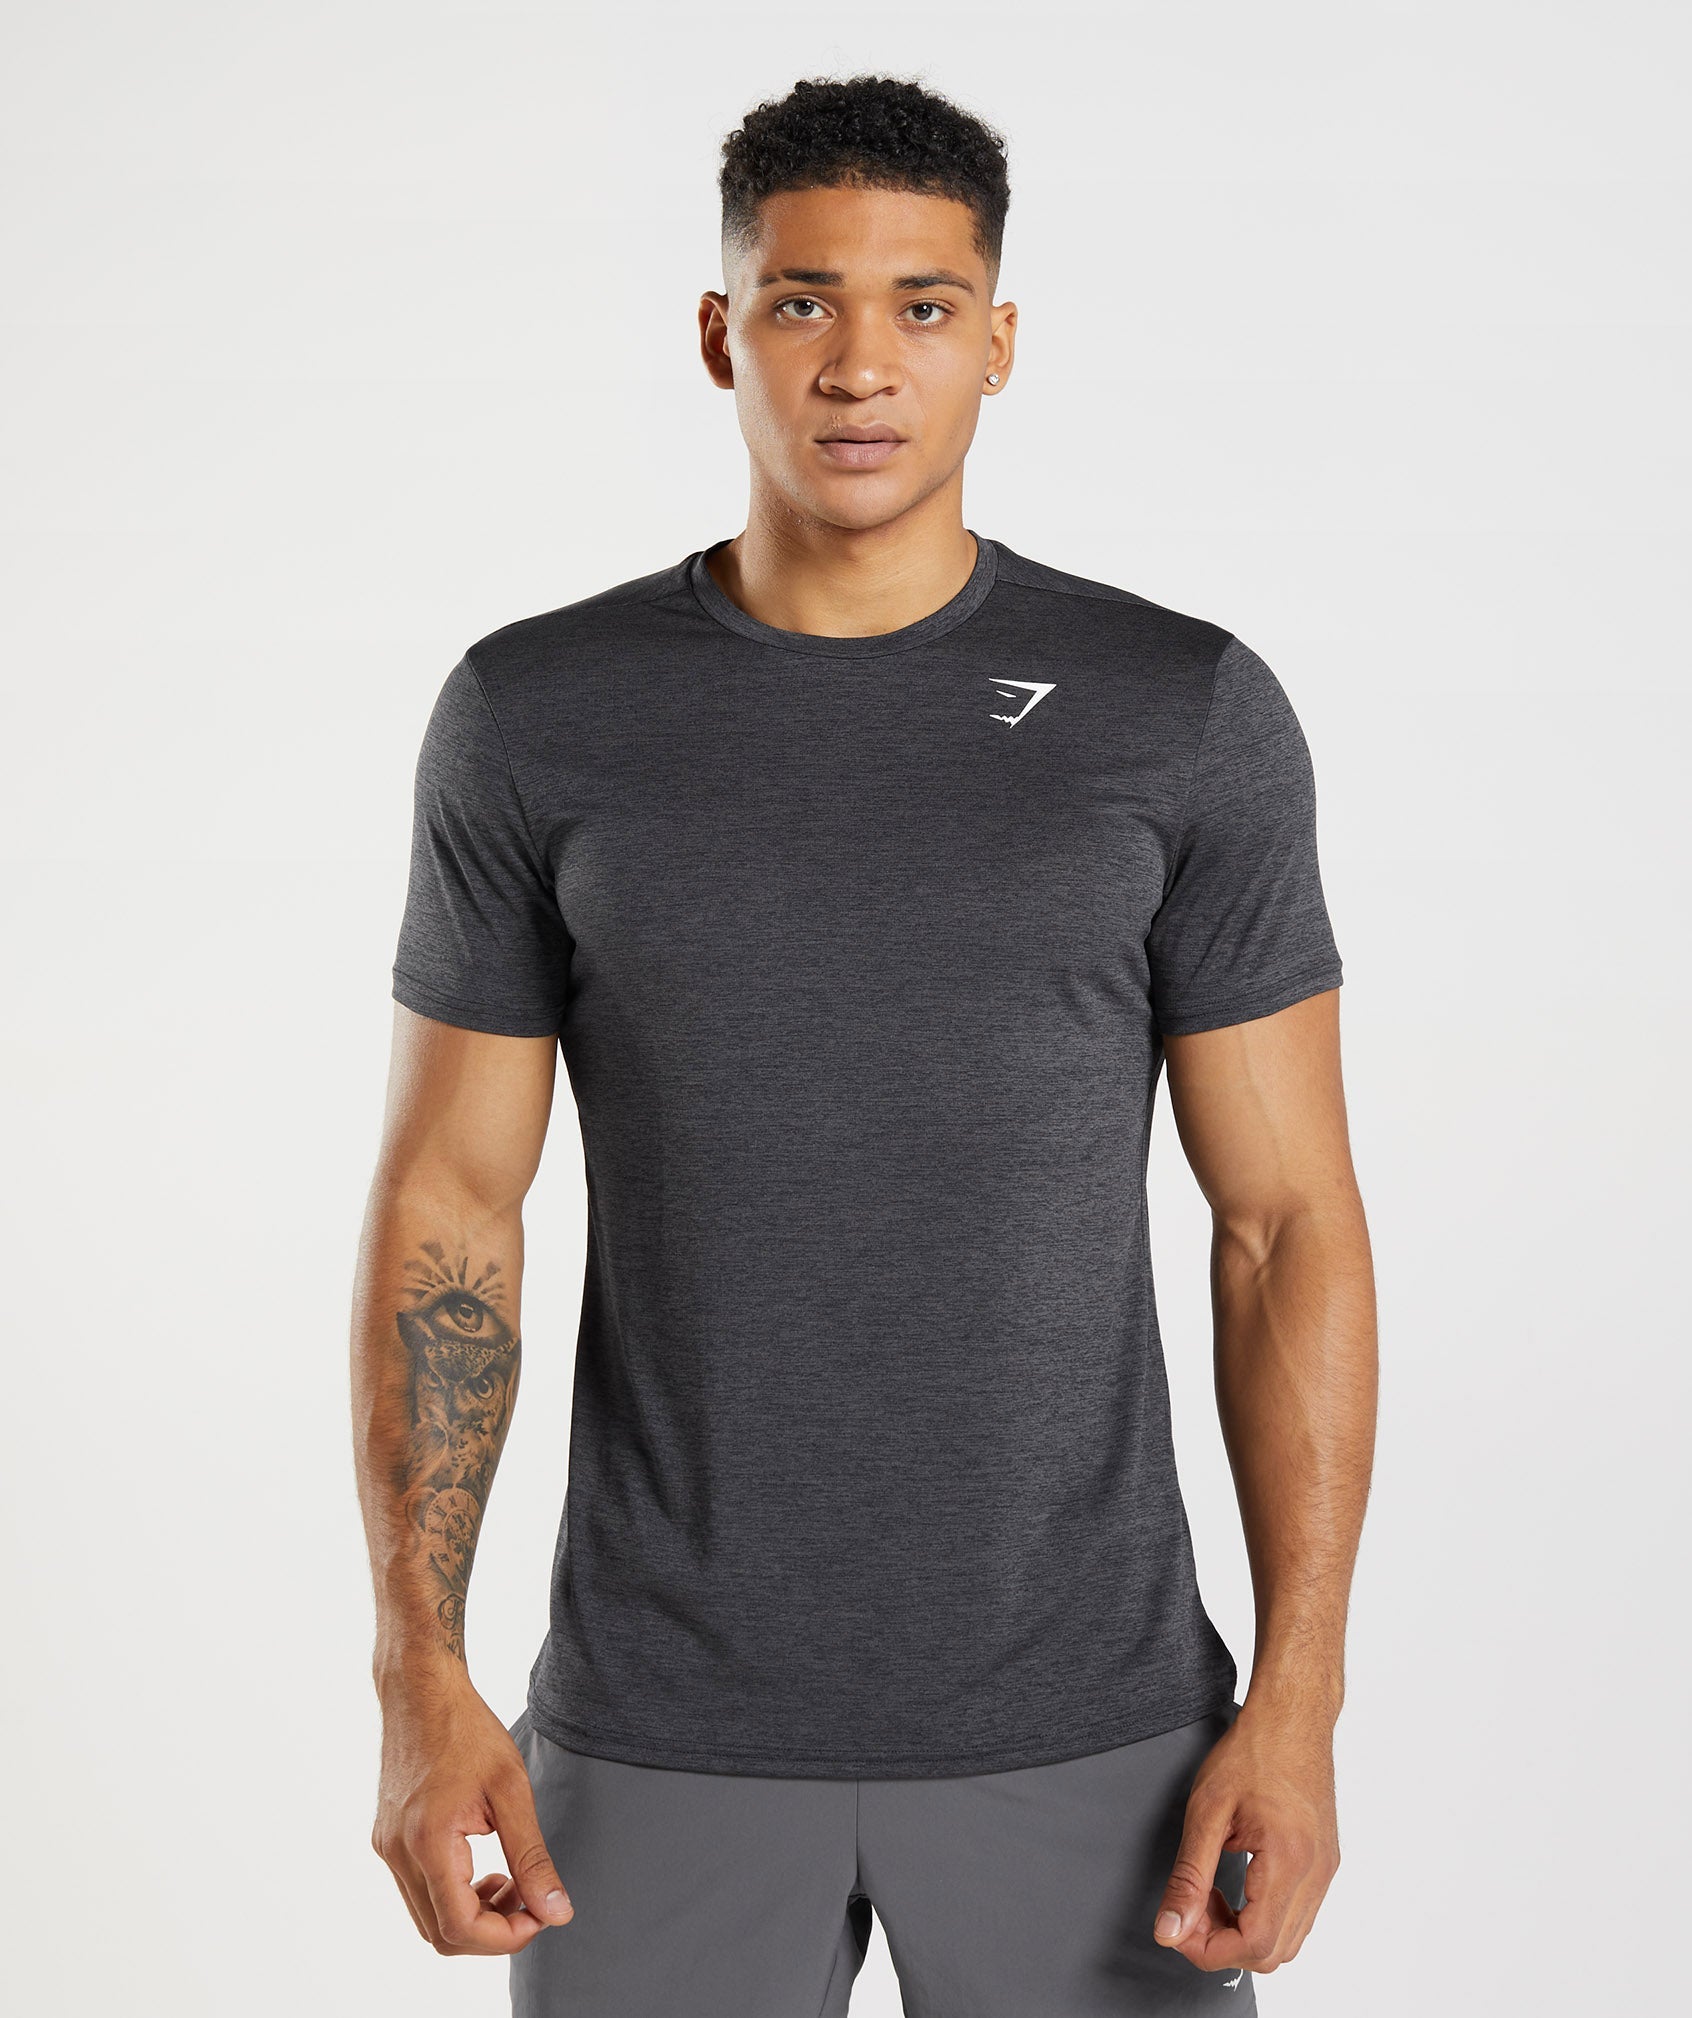 Gymshark Fitness Half Sleeve Black T-Shirt